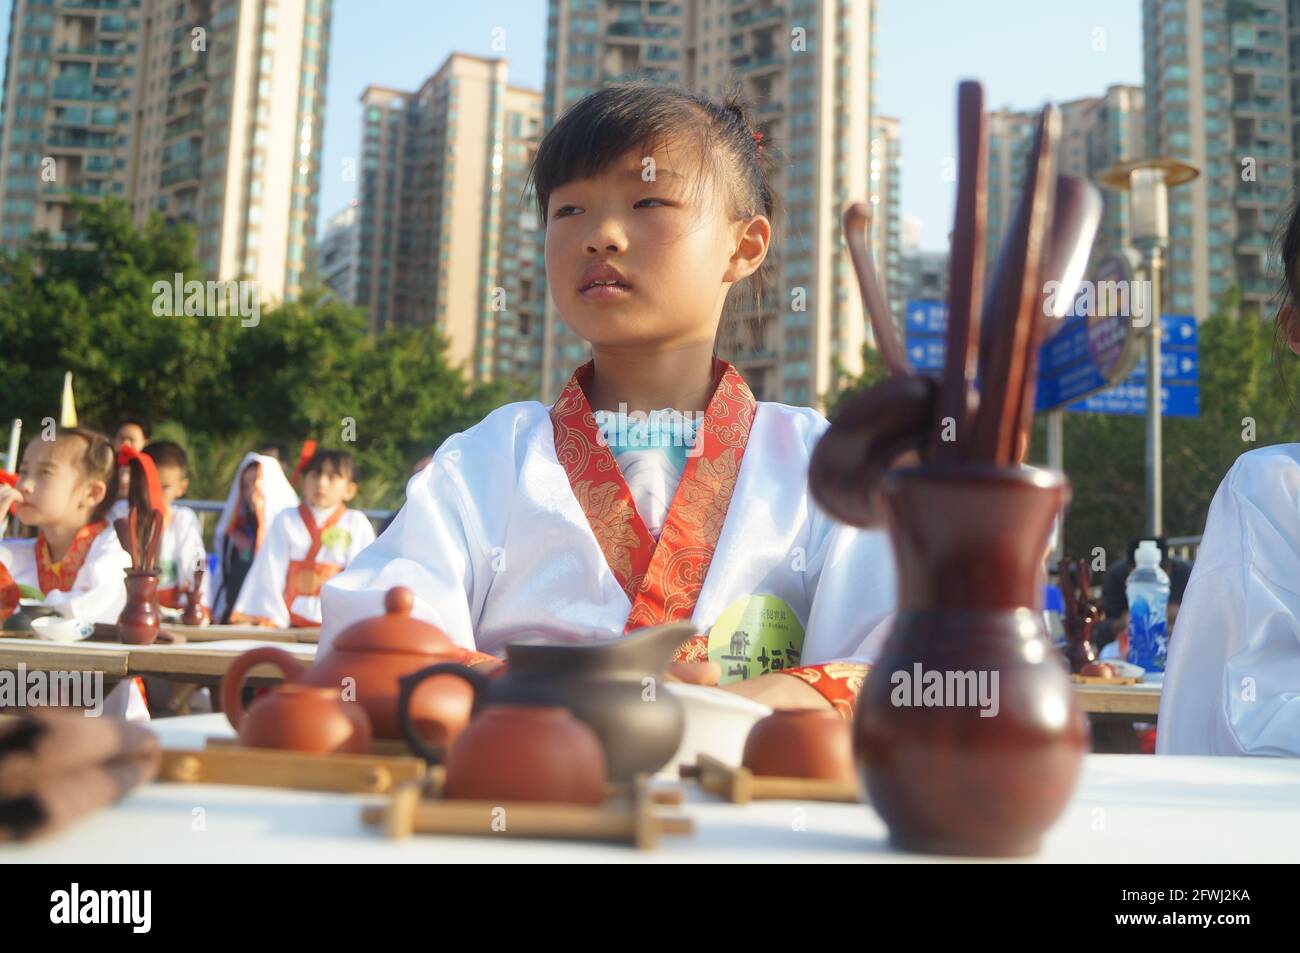 Shenzhen, China: Children's activities of inheriting traditional tea culture Stock Photo